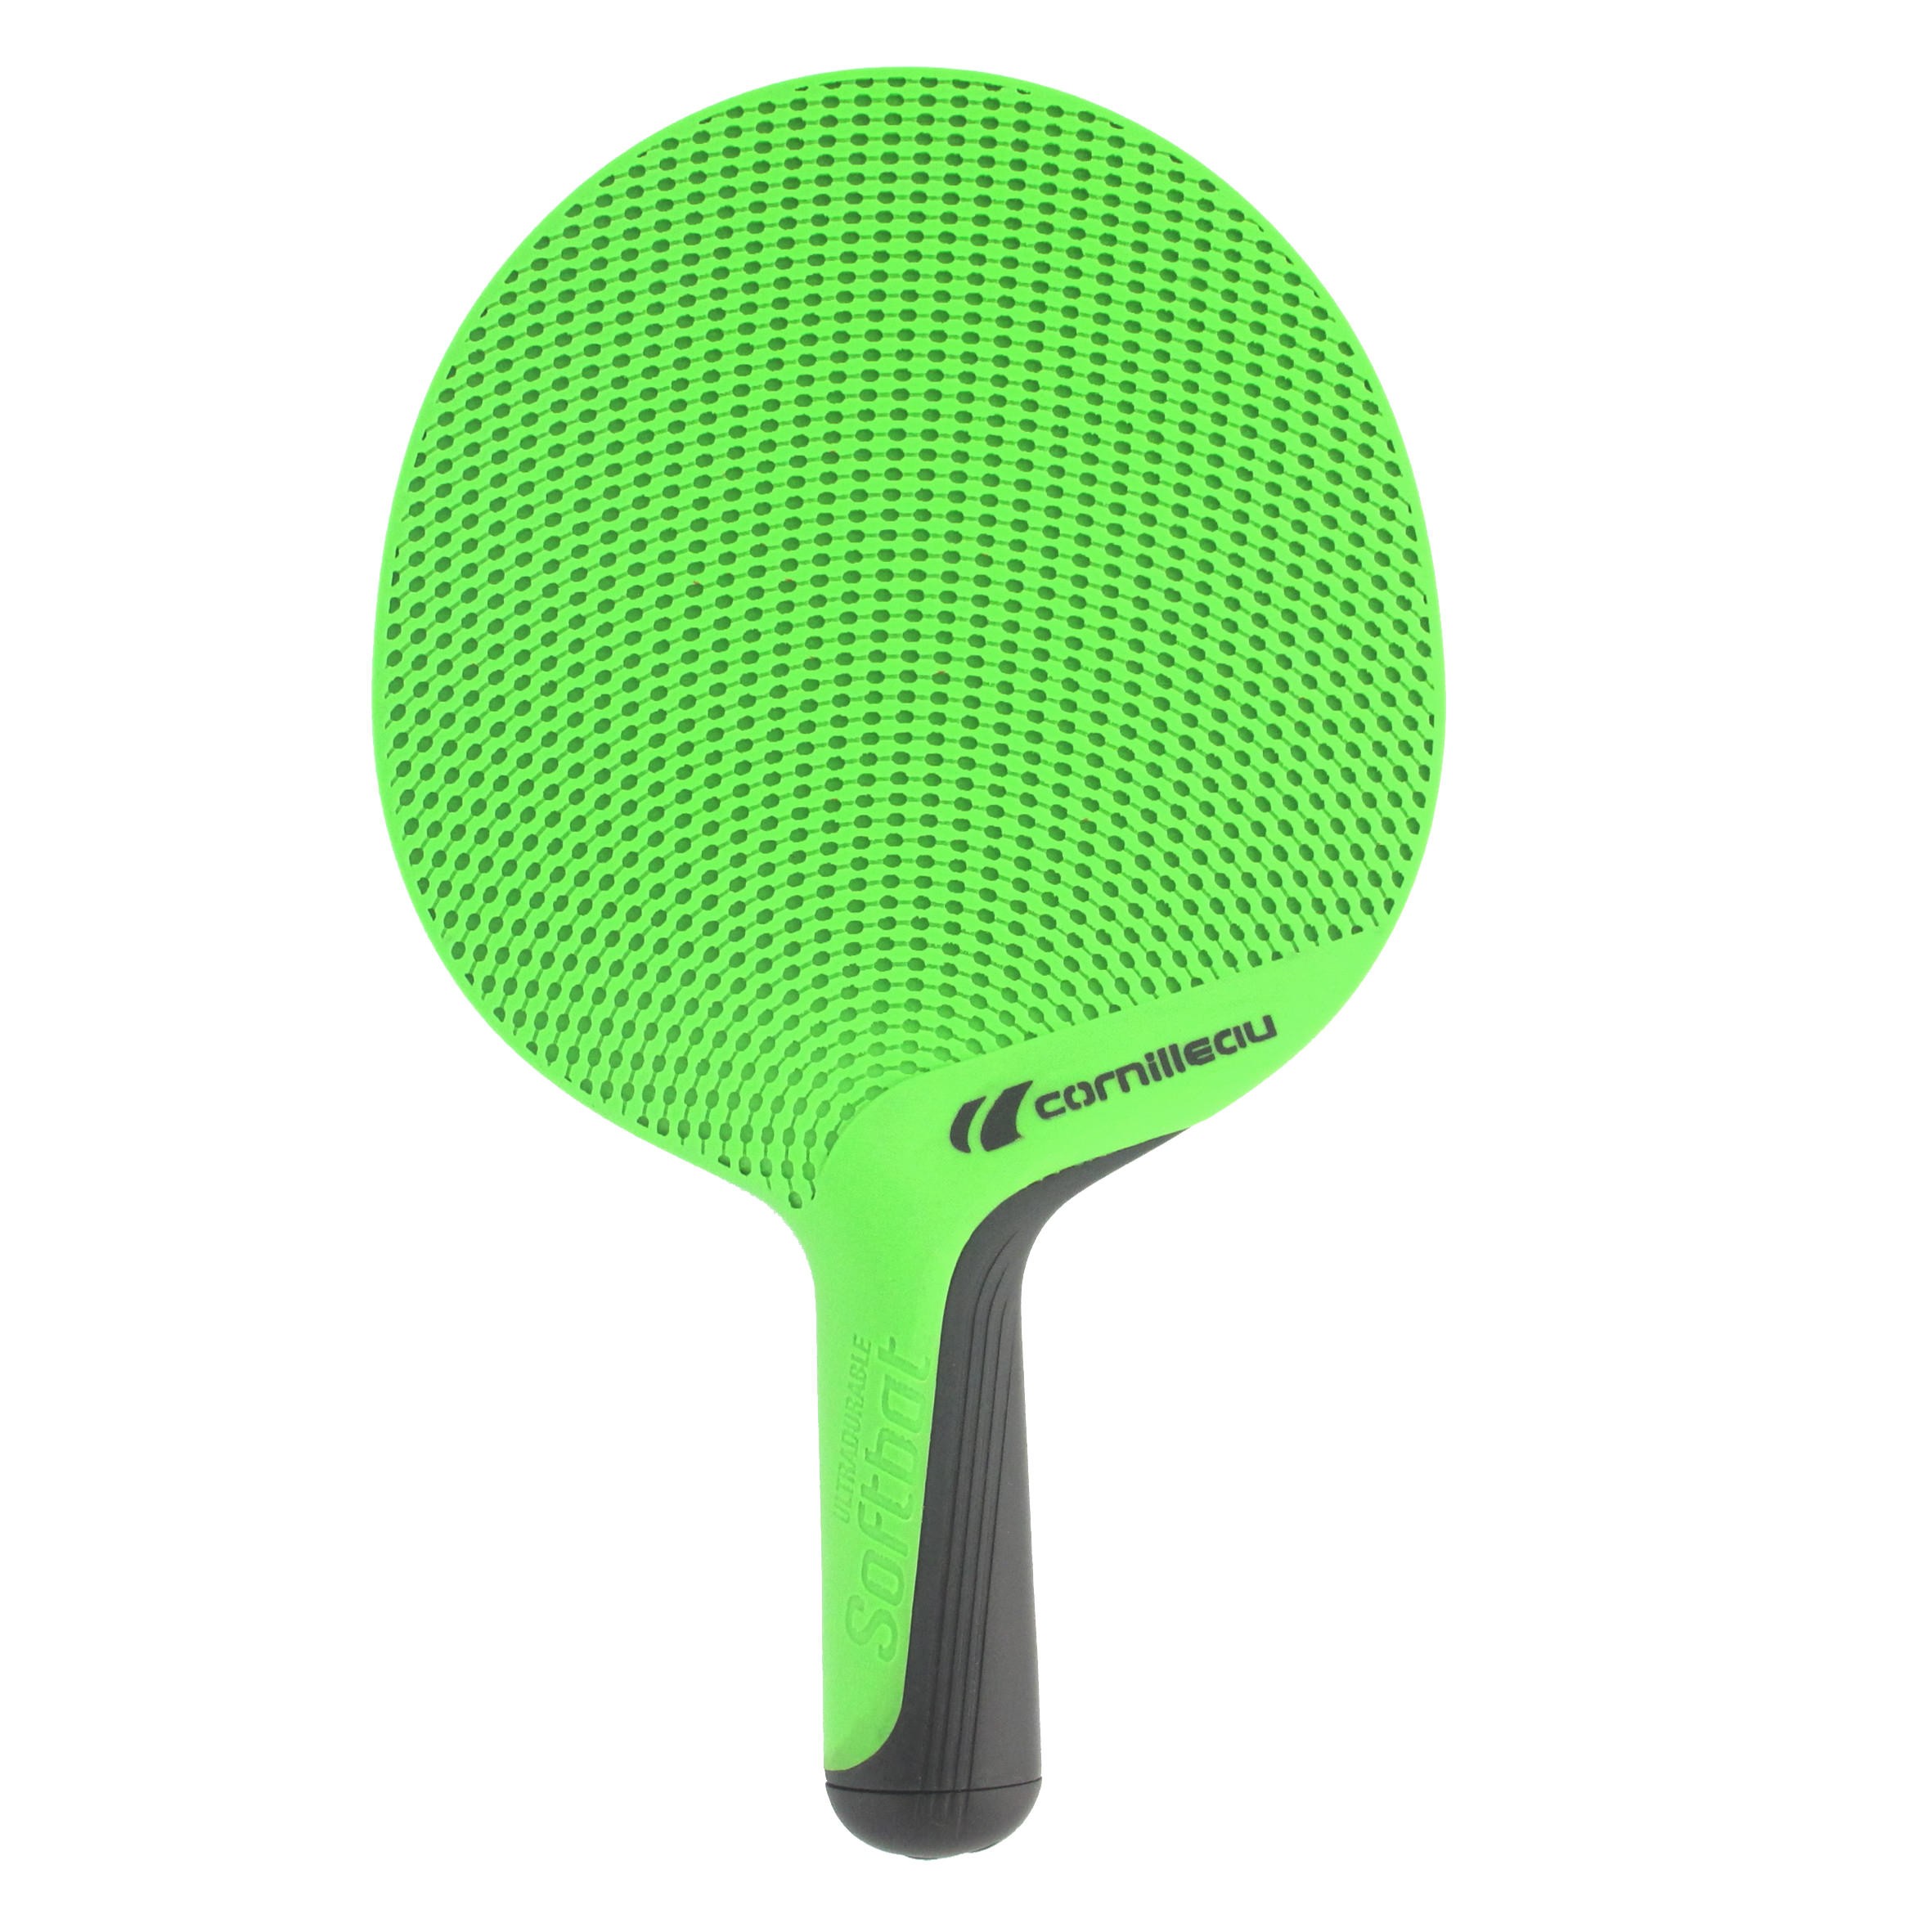 https://bemypool.es/7070/raqueta-de-ping-pong-cornilleau-softbat-exterior-verde.jpg